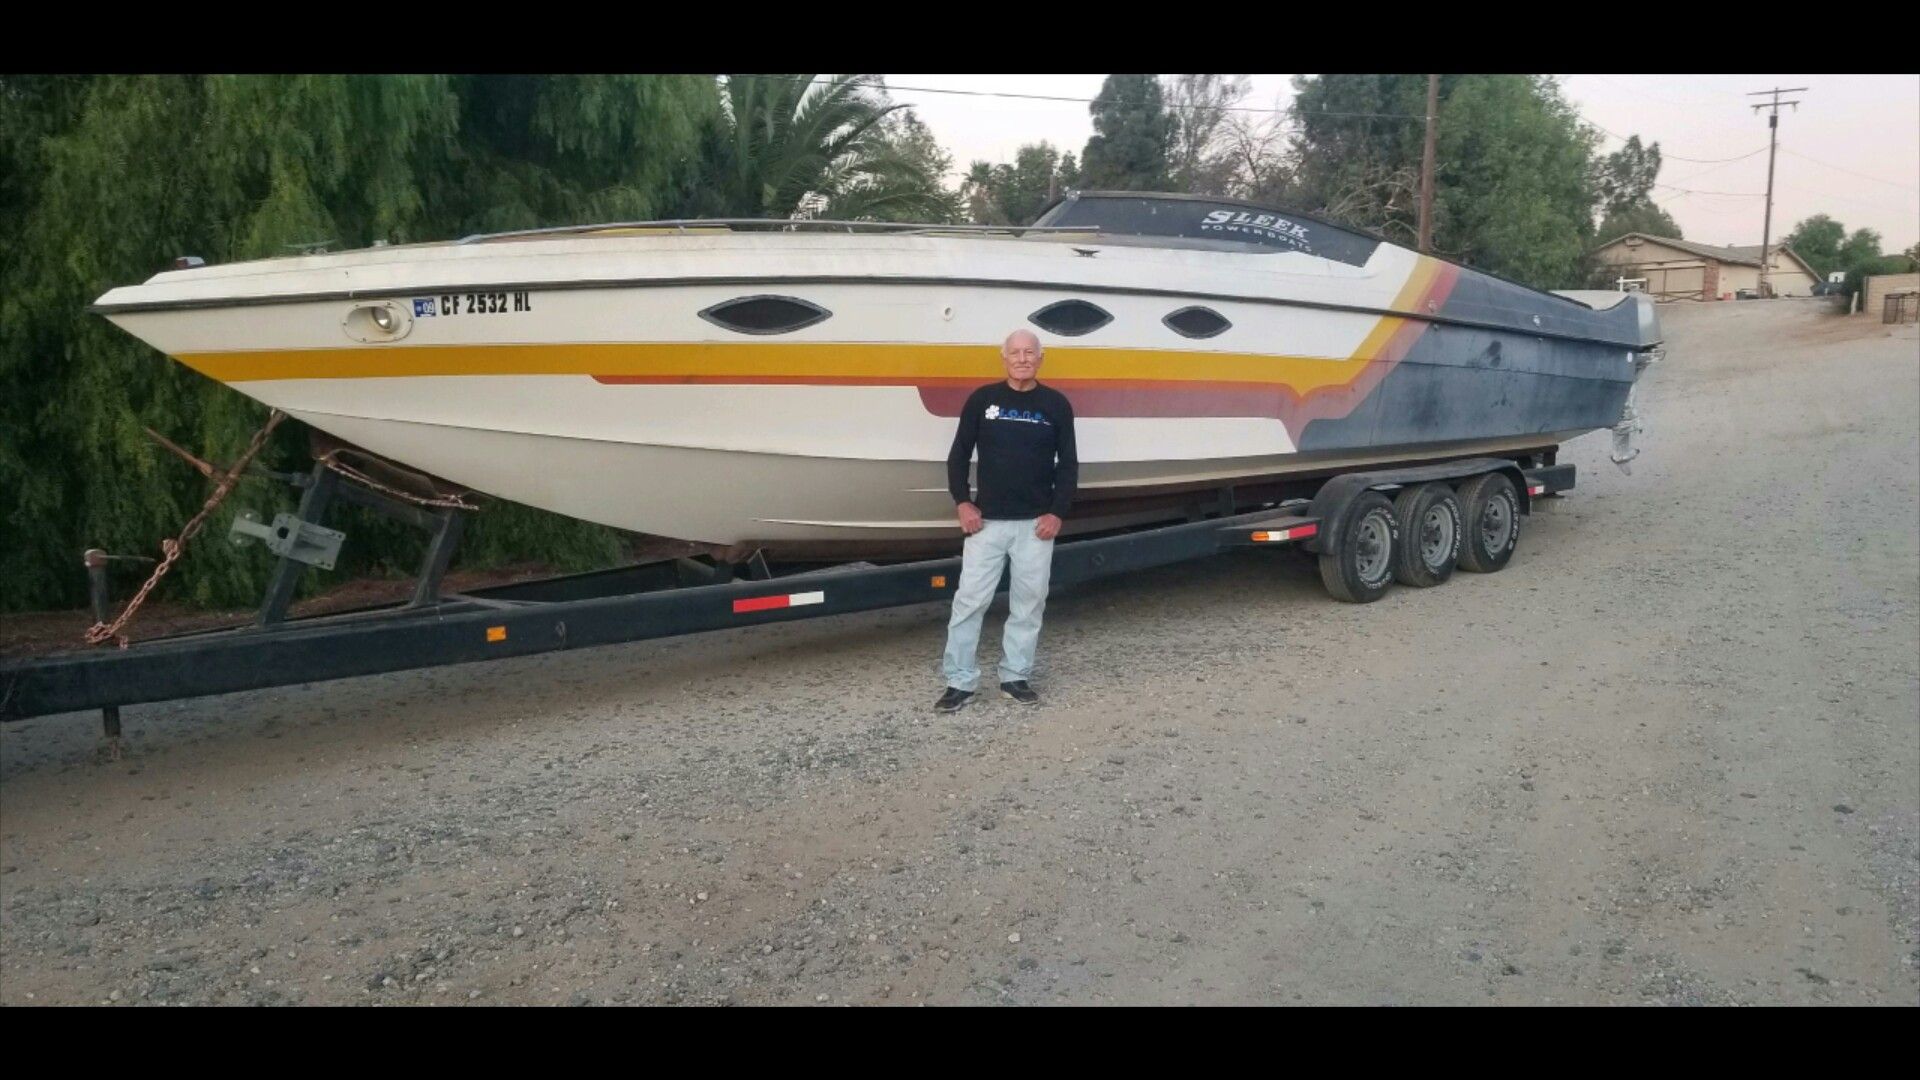 Nice 36' foot boat